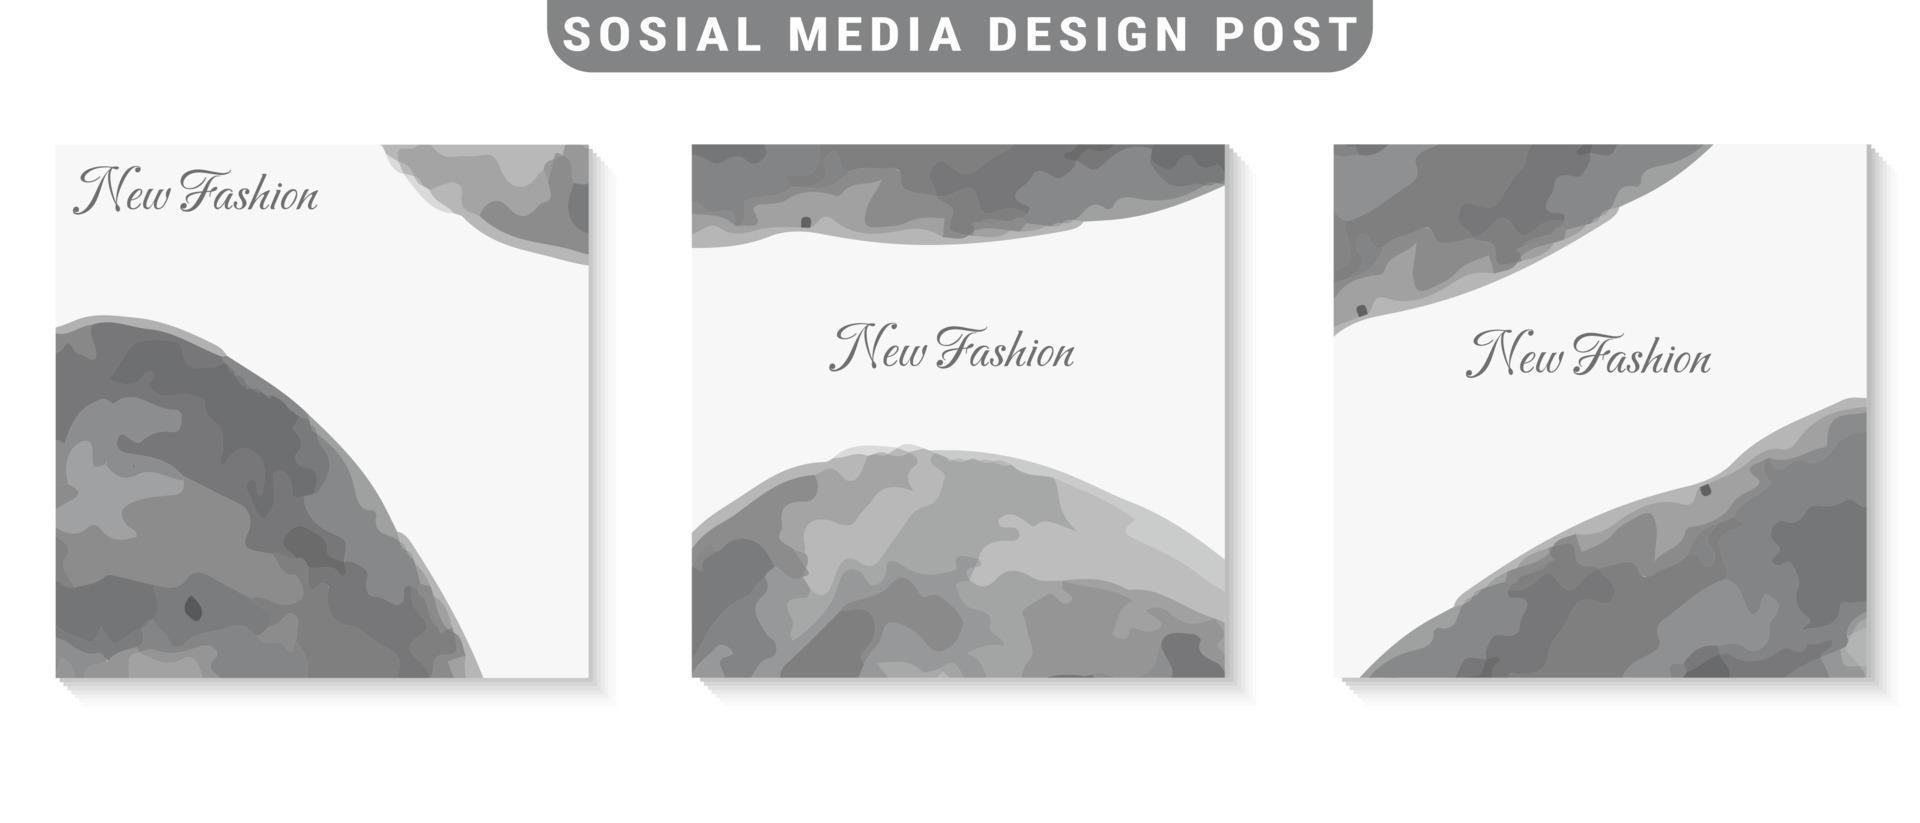 media social post template set collection vector